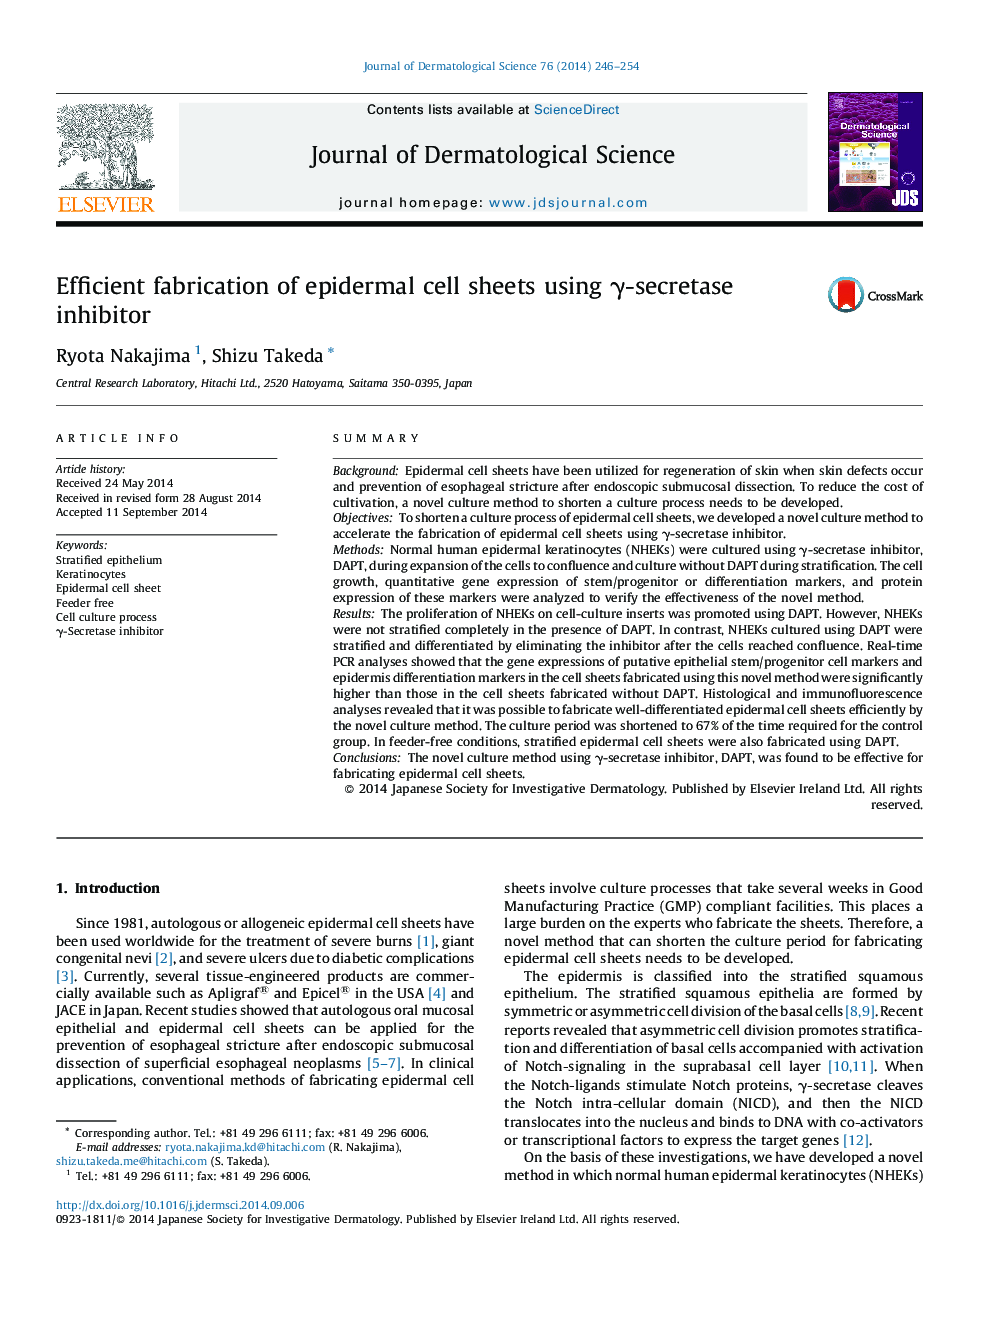 Efficient fabrication of epidermal cell sheets using γ-secretase inhibitor